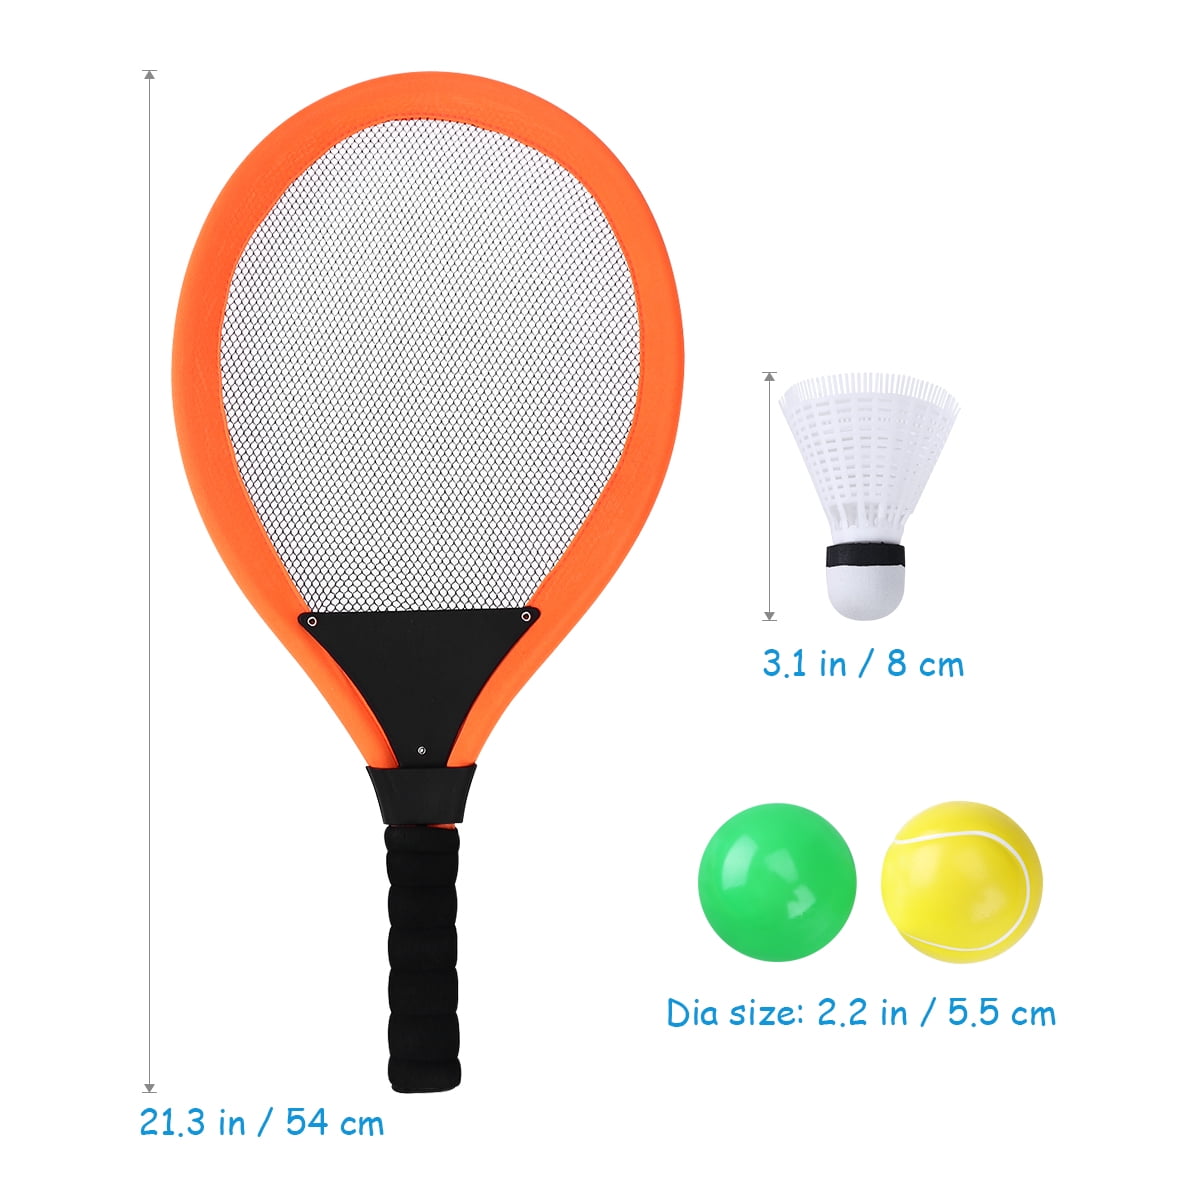 2 Pcs Badminton Tennis Racket and Balls Shuttlecock Mini Kids Outdoor Sports Toy